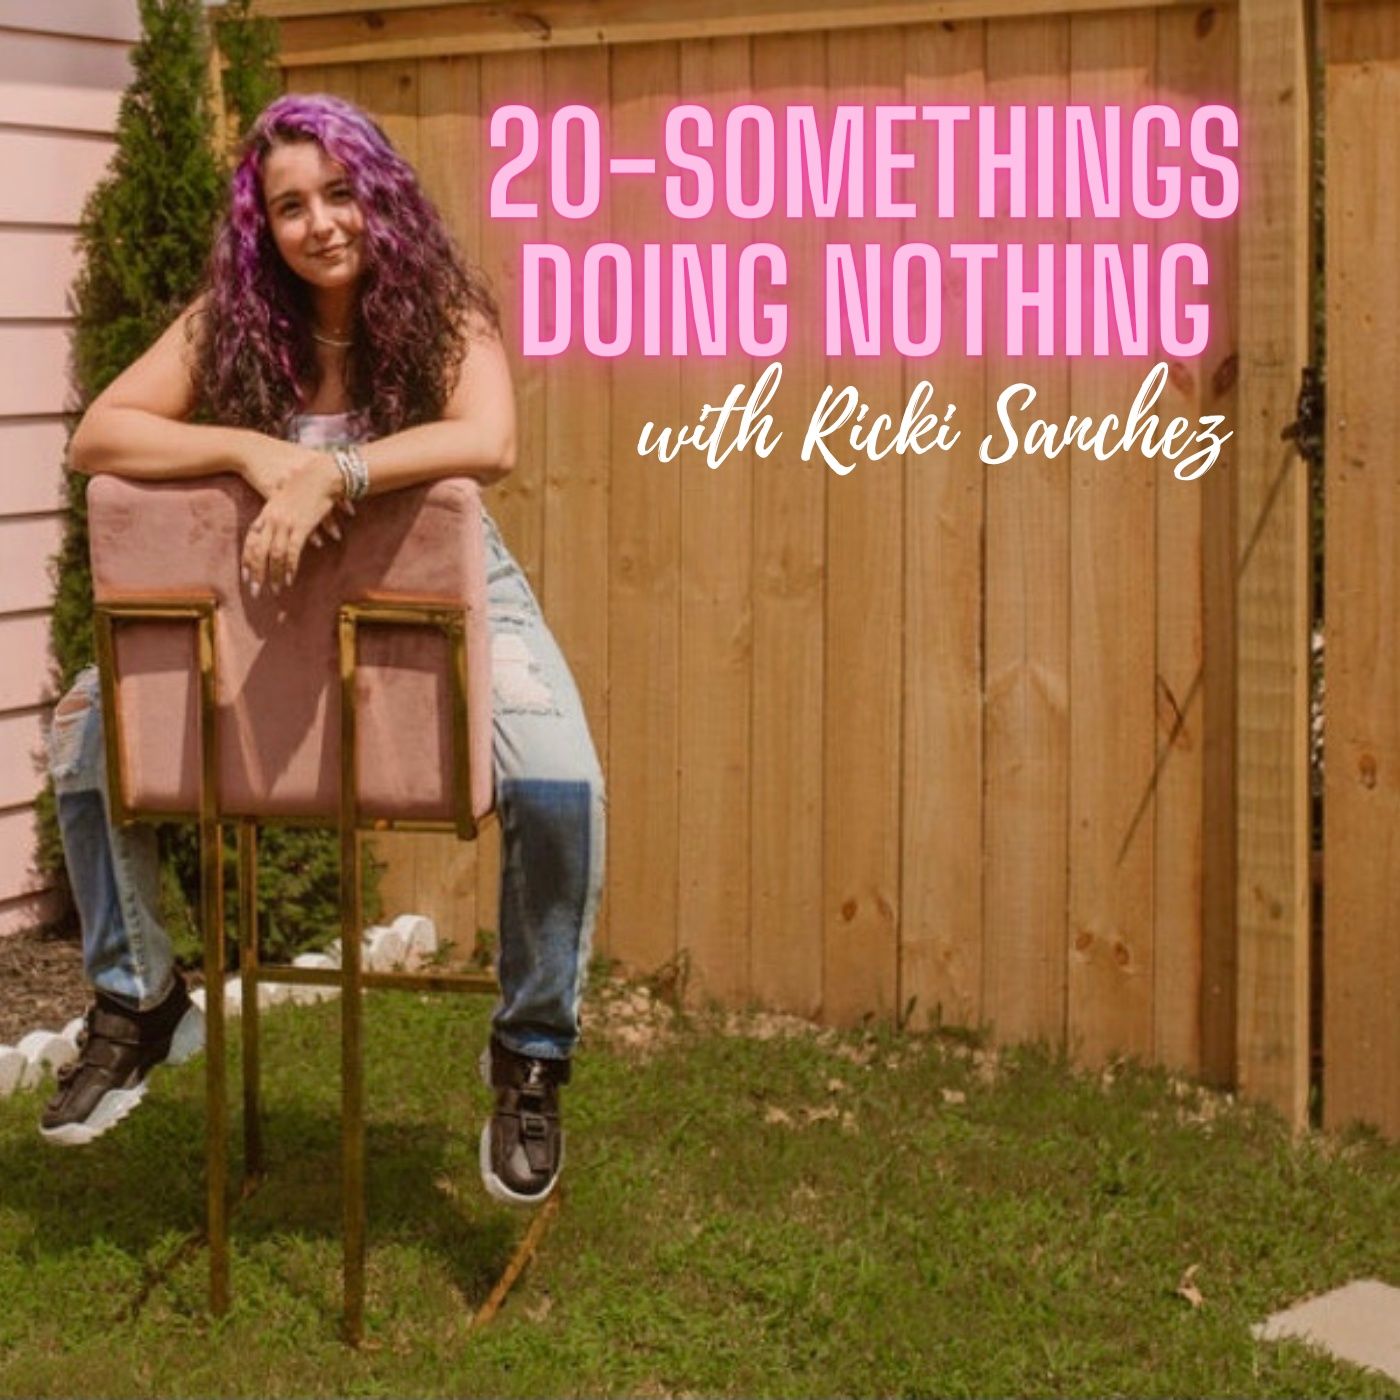 20-Somethings Doing Nothing